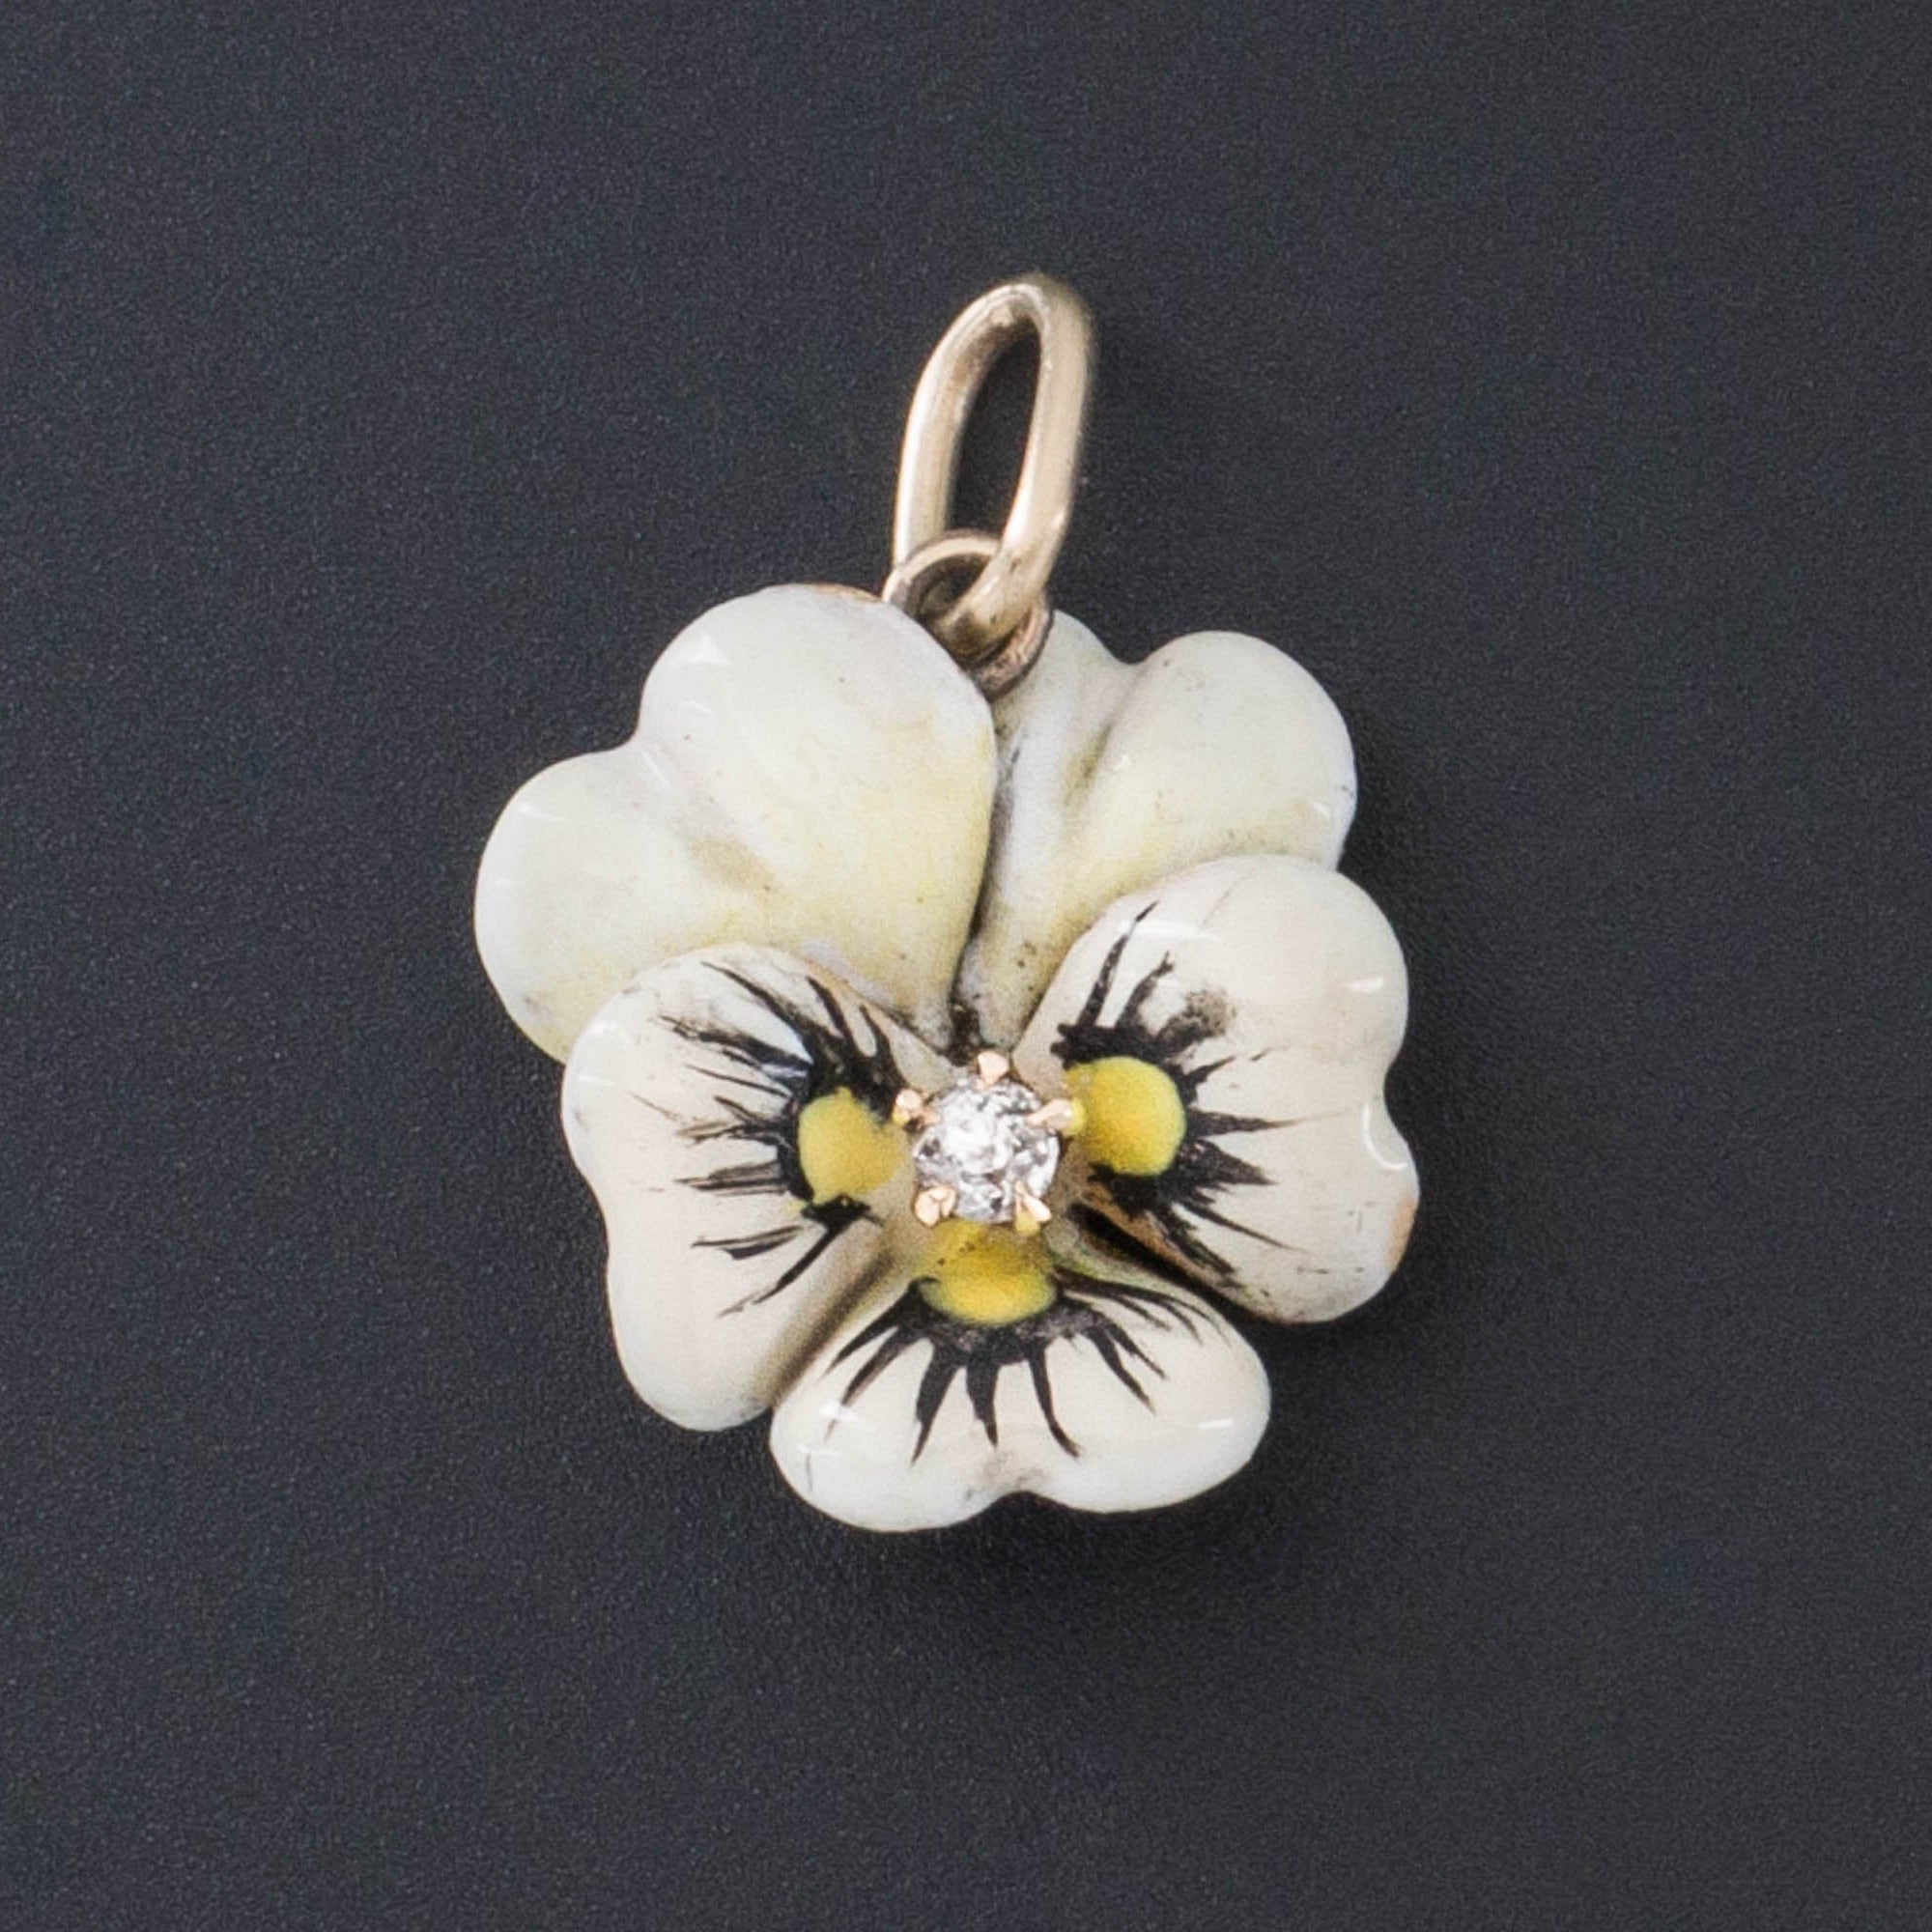 Pansy Charm | Antique Enamel Flower Charm | 14k Gold Charm | White Enamel Pansy Charm | Antique Pin Conversion